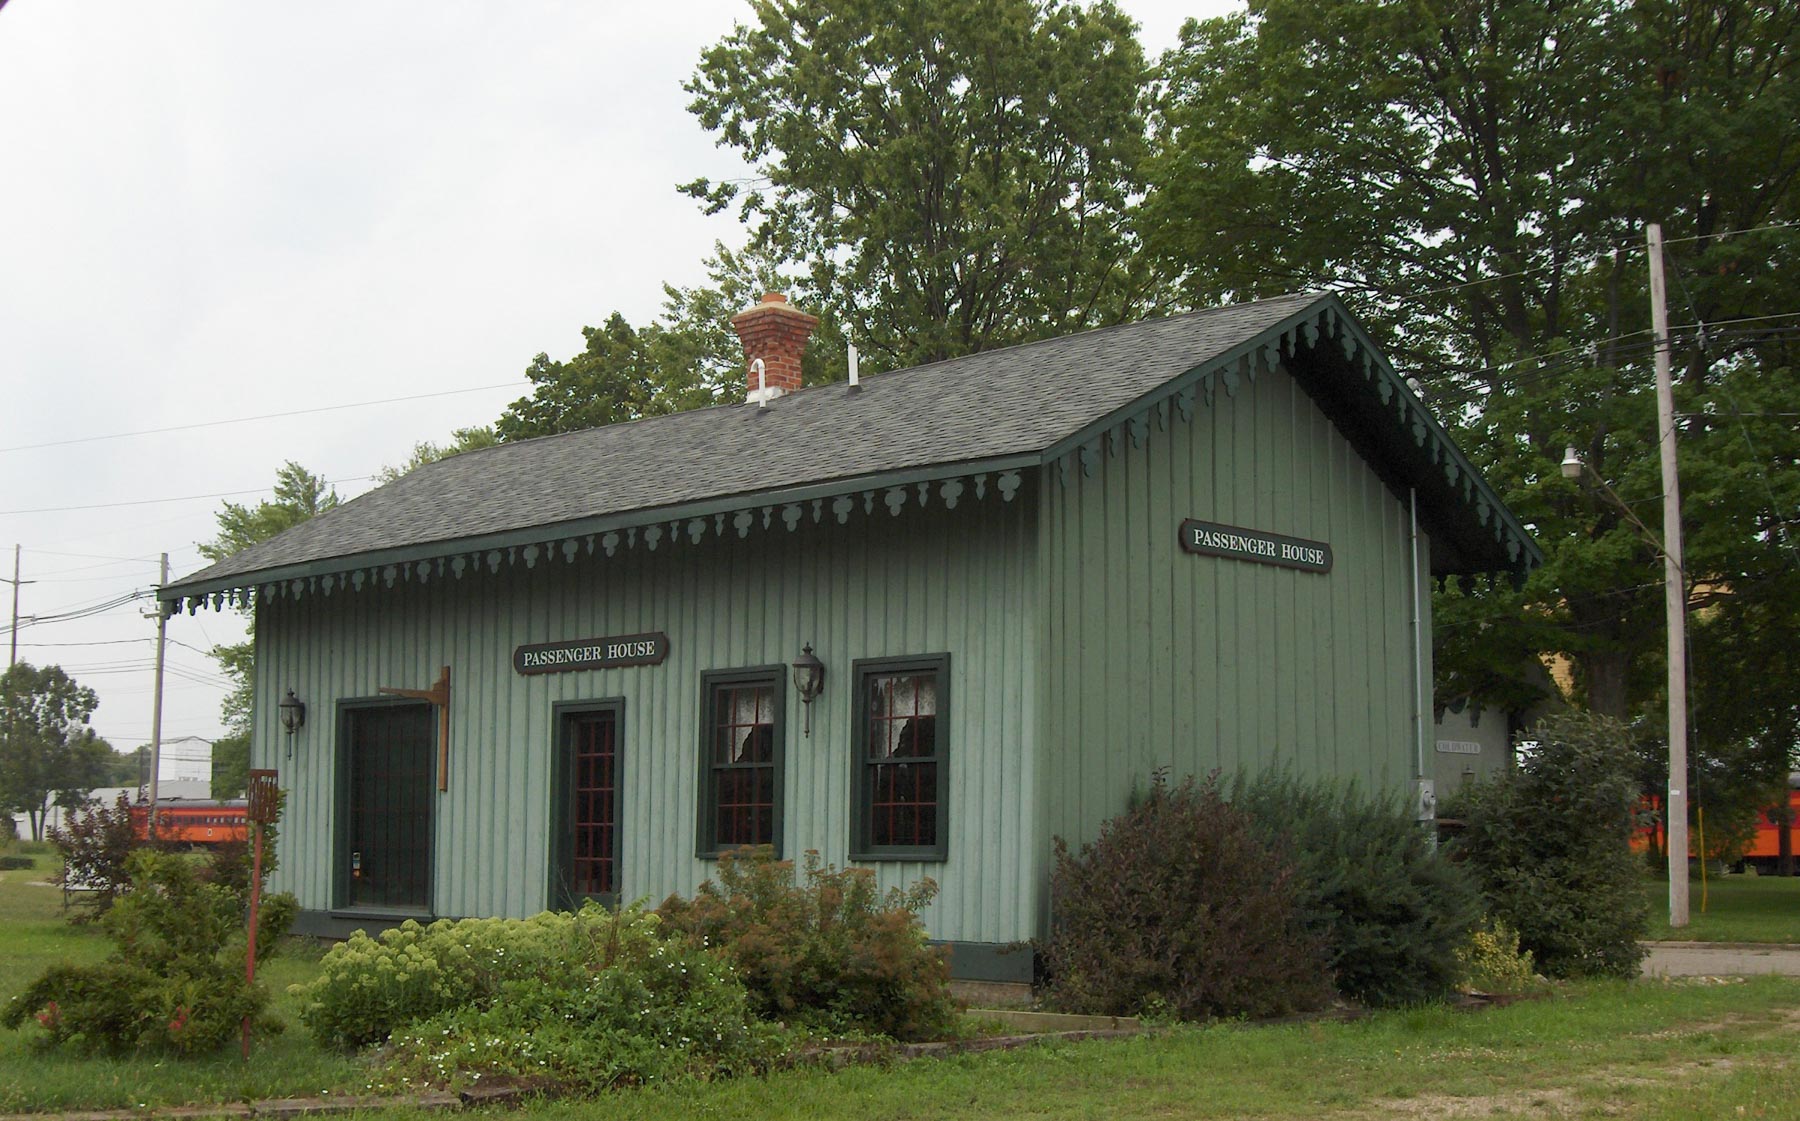 Original Passenger House